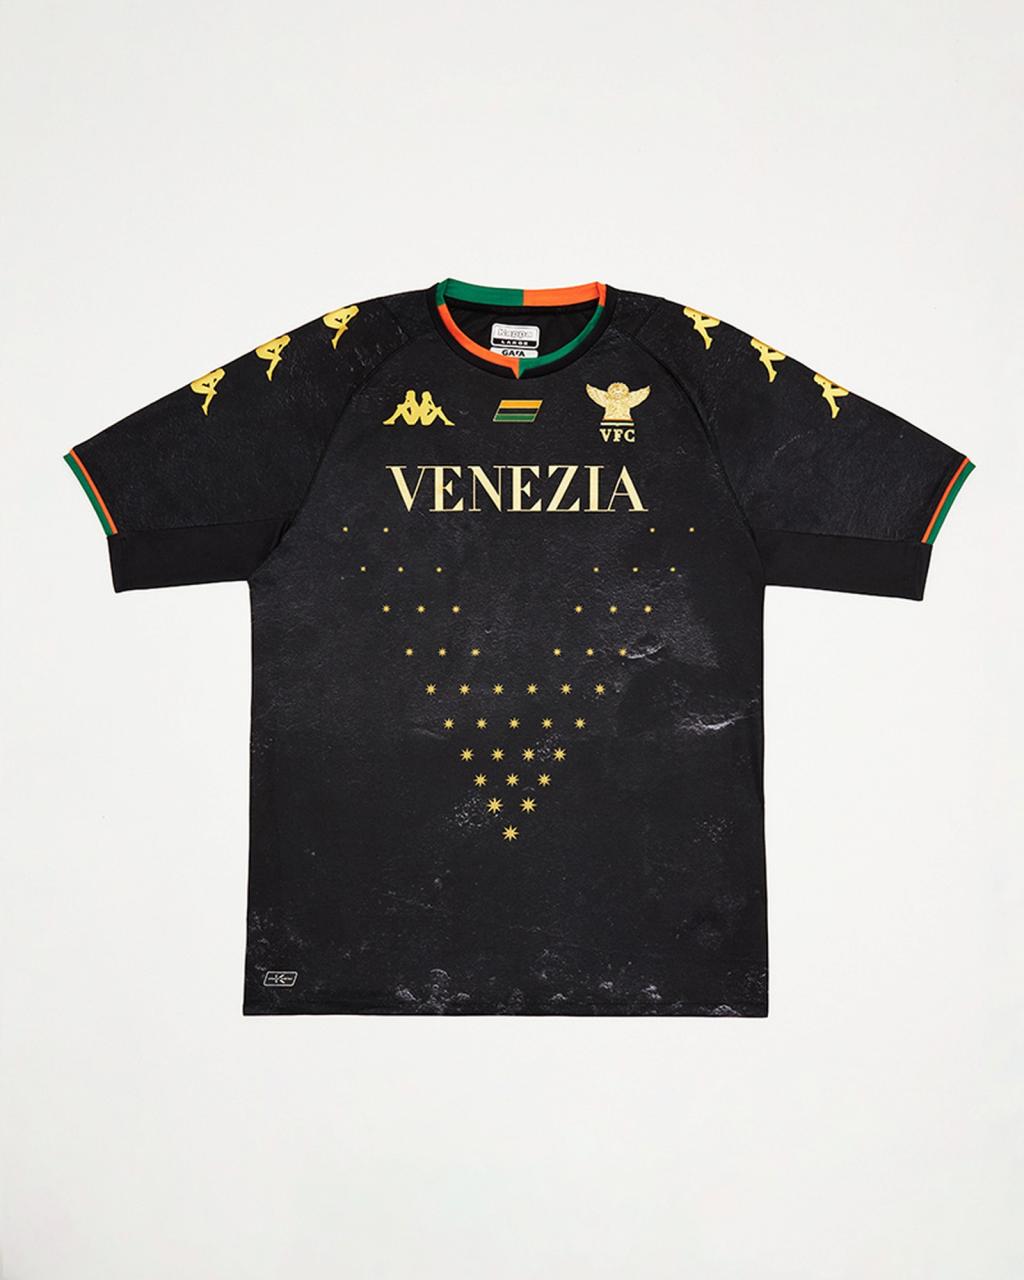 venezia-kappa-home-shirt-01.jpg